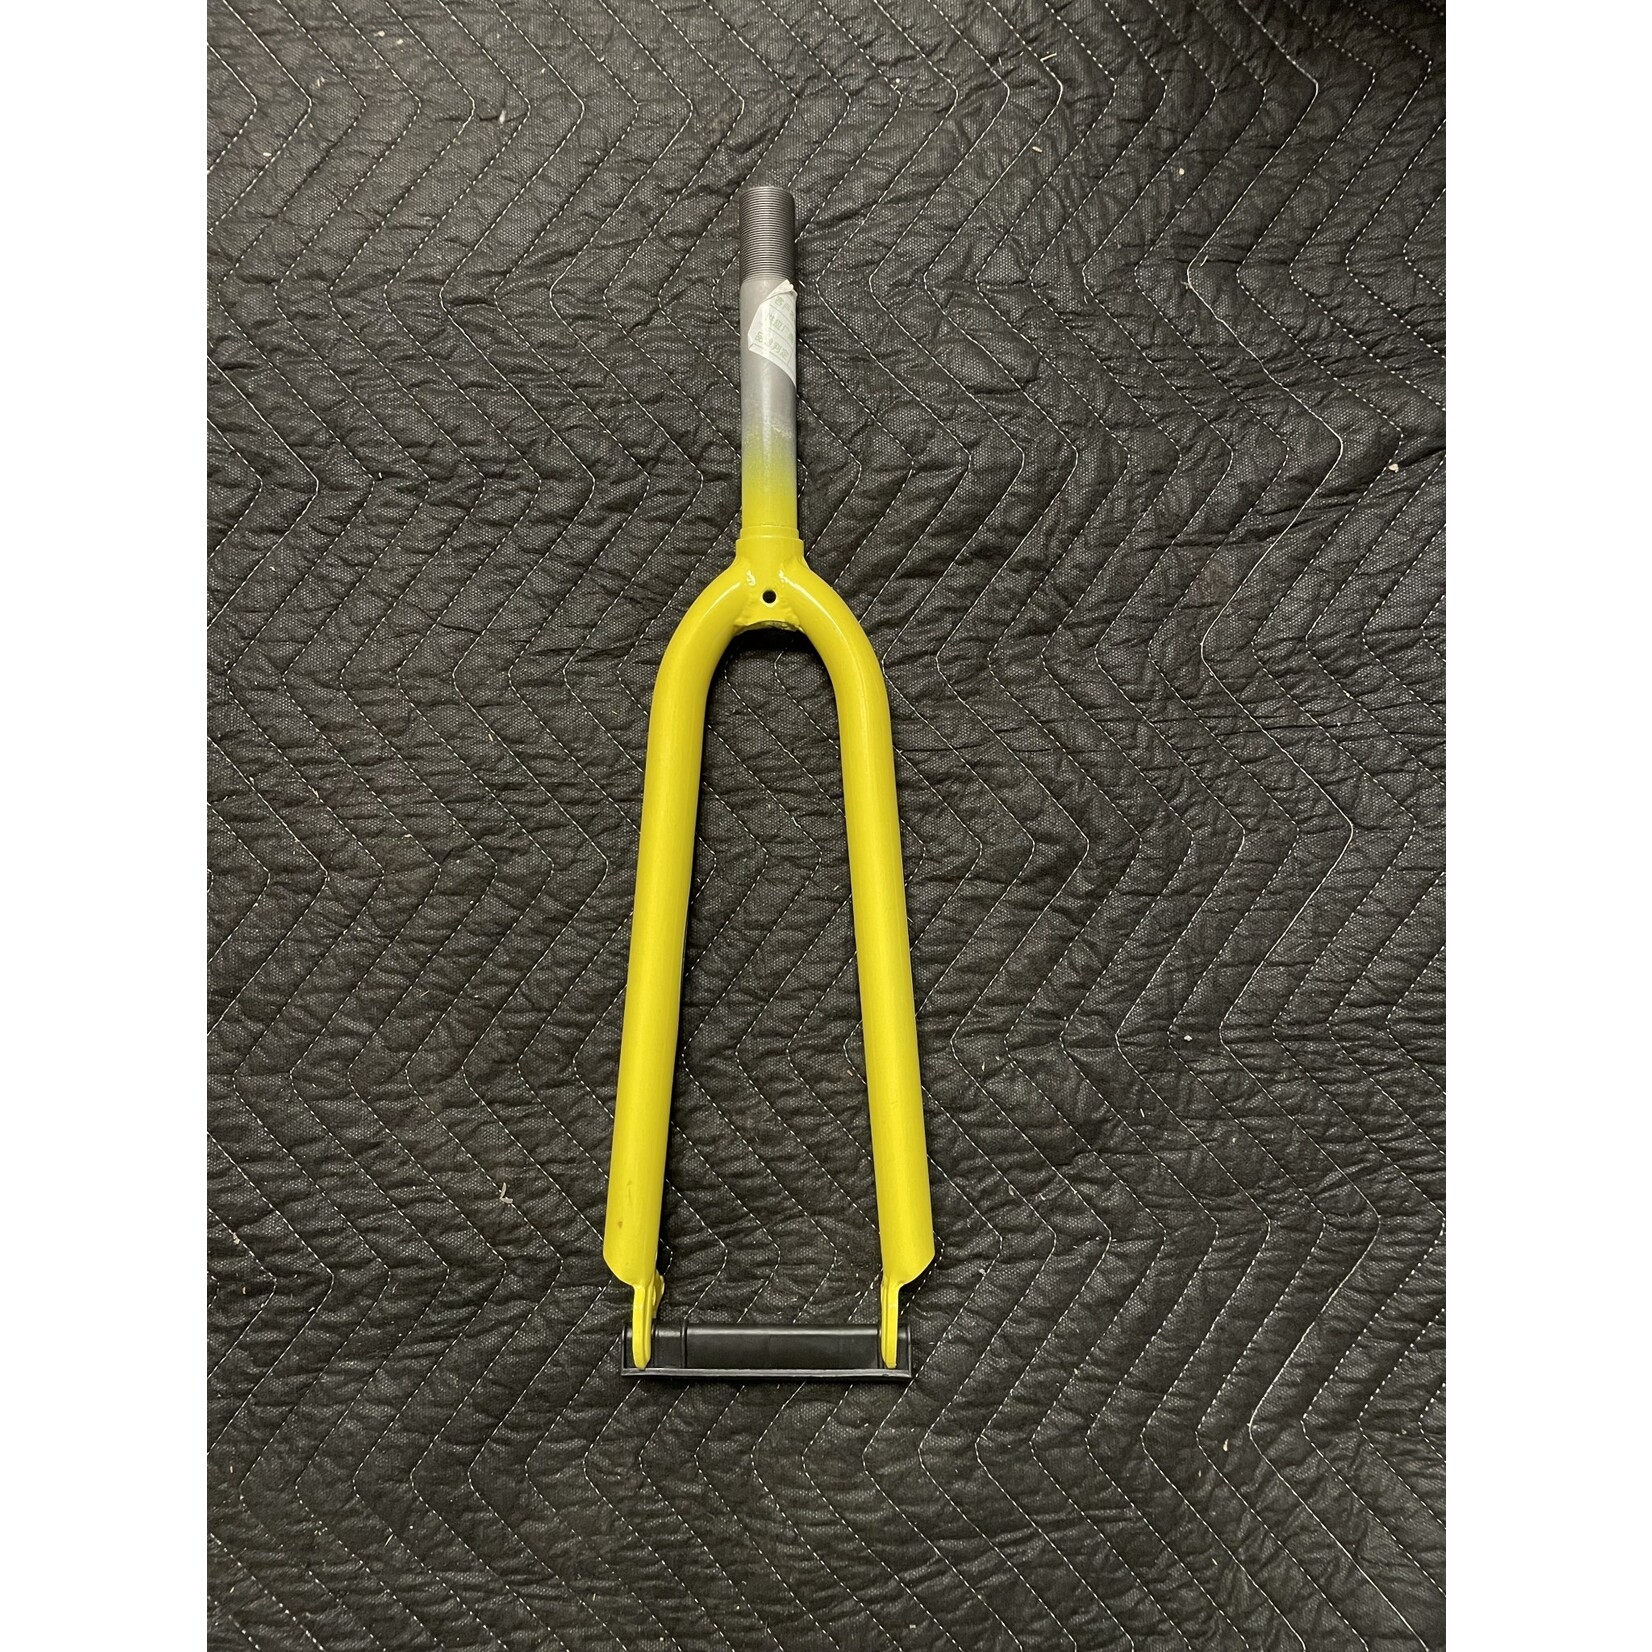 Denali 24” 1” Threaded Rigid Bicycle Fork (Yellow)